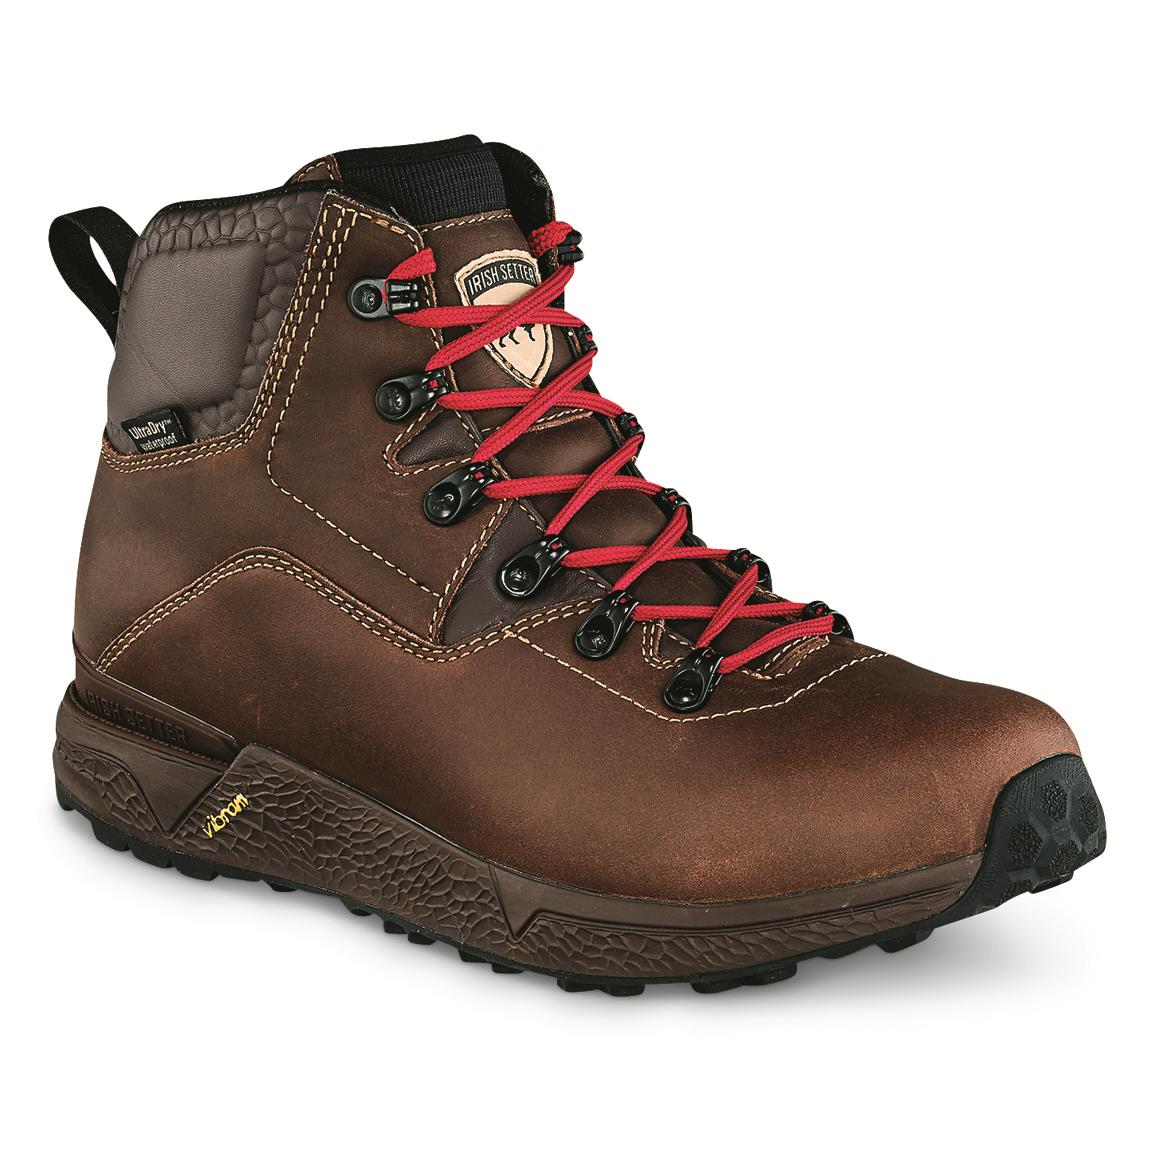 Irish Setter Men's Canyons Waterproof Hiking Boots, Brown